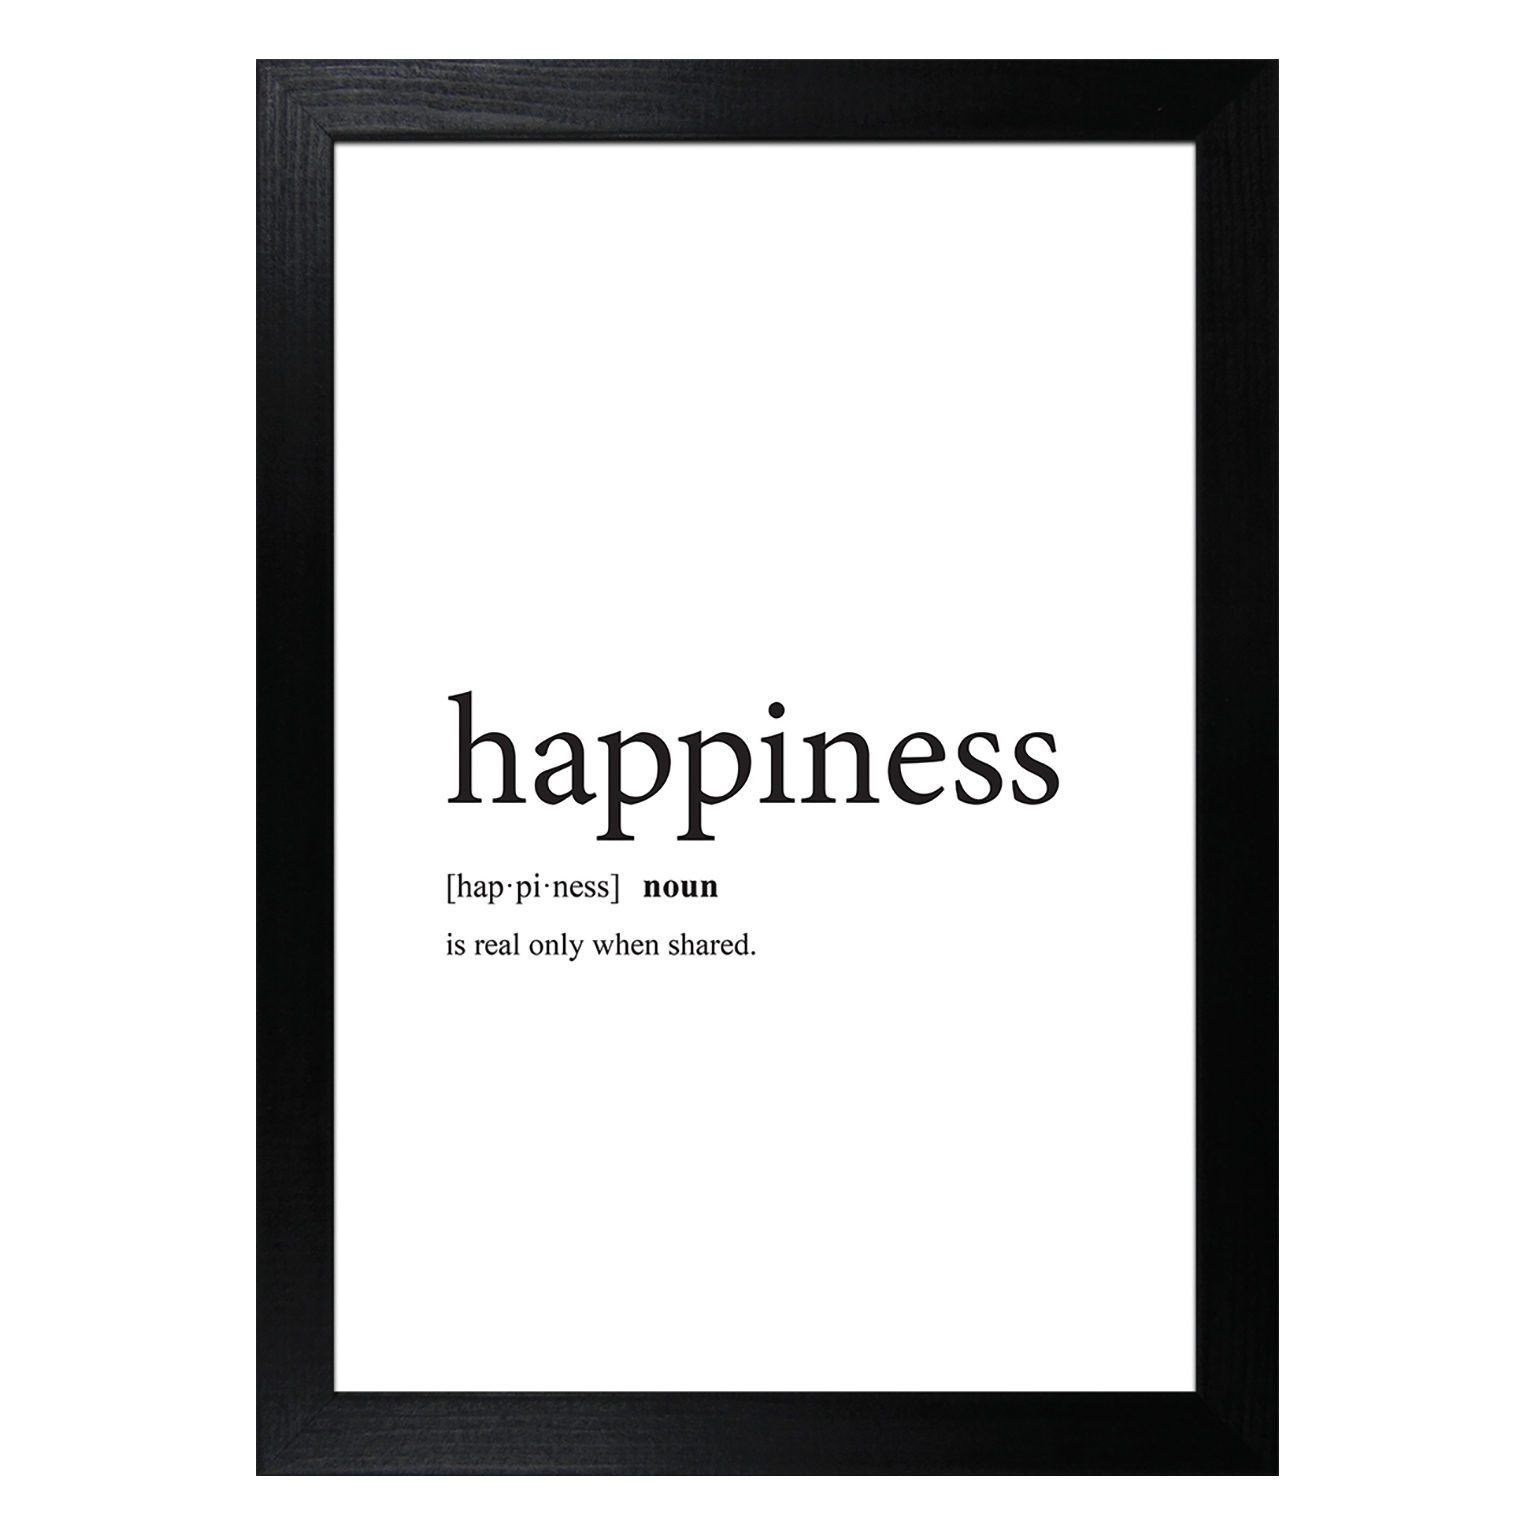 Stampa incorniciata Happiness 13x18 cm - 1